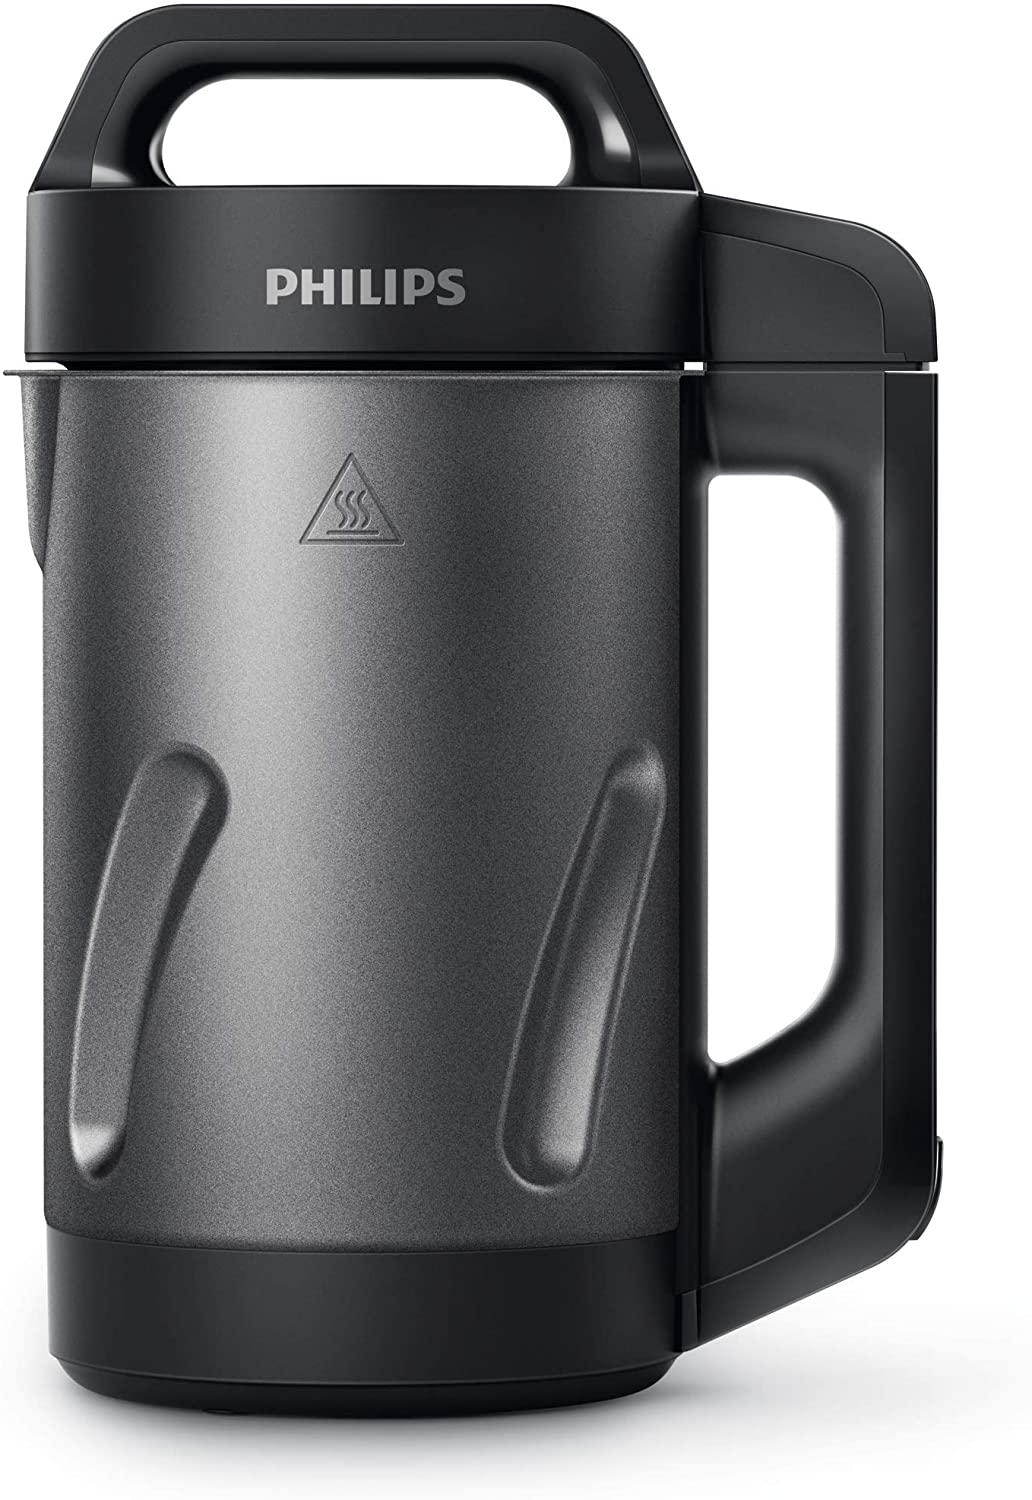  Soupe Maker PHILLIPS Philips HR2204/80 Blender chauffant 1,2L